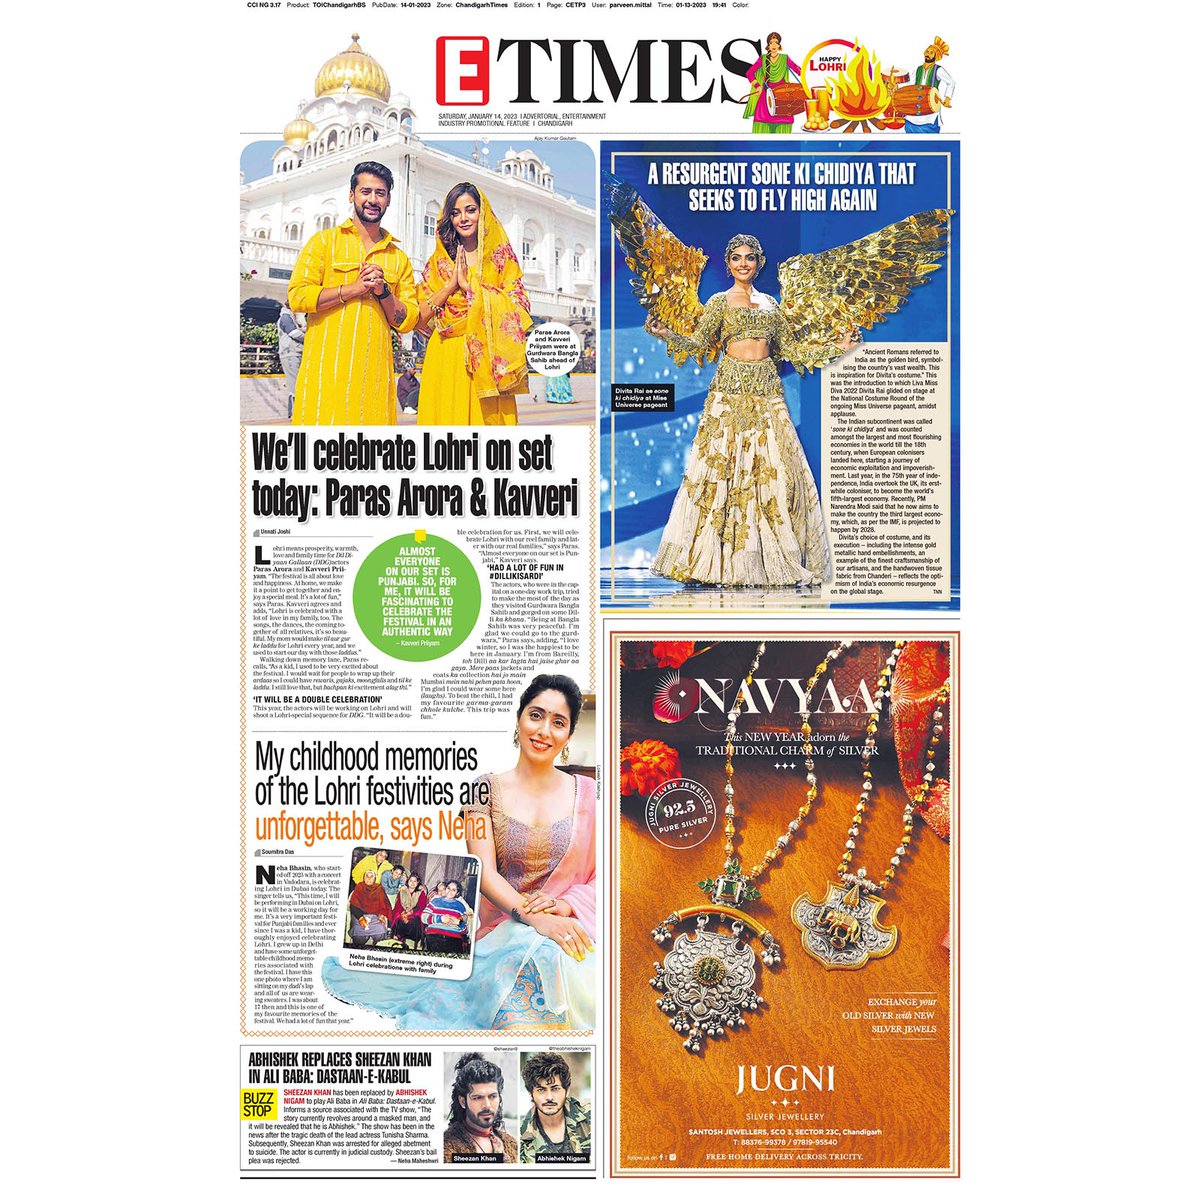 Are you missing #ETimes print edition? Log on to epaper.timesofindia.com to read...
#parasarora #kavveri #lohricelebrations #makarsankranti #sonekichidiya #india #missindia #gurudrwa #nehabhasin #happylohri #sheezankhan #abhisheknigam #dastaanekabul